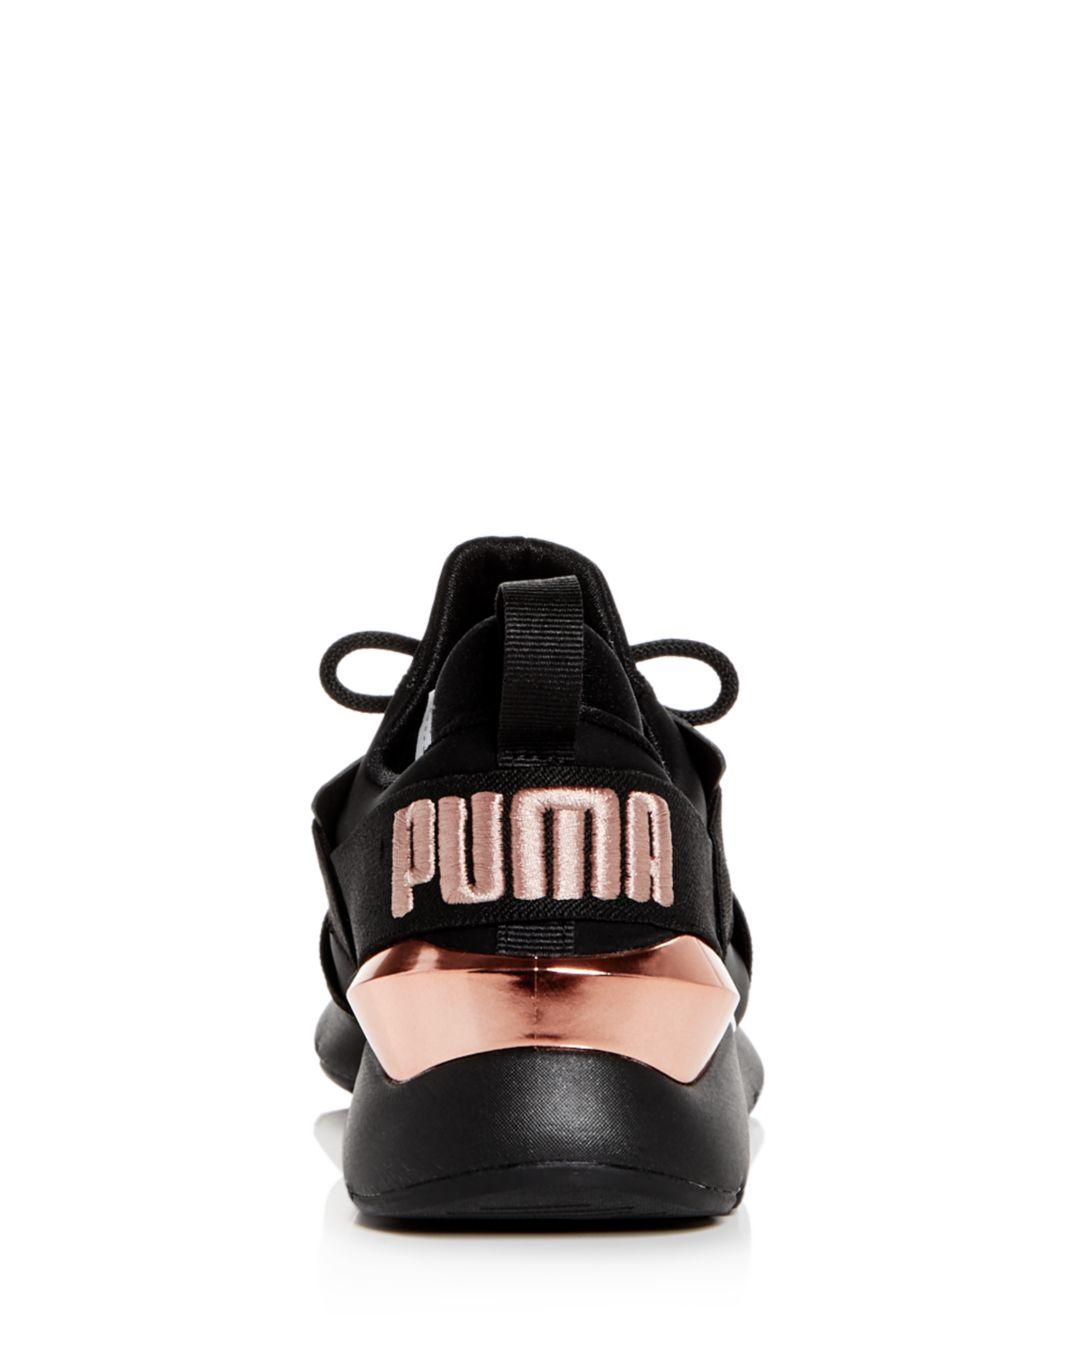 PUMA Muse X-2 Metallic Sneakers in Black | Lyst